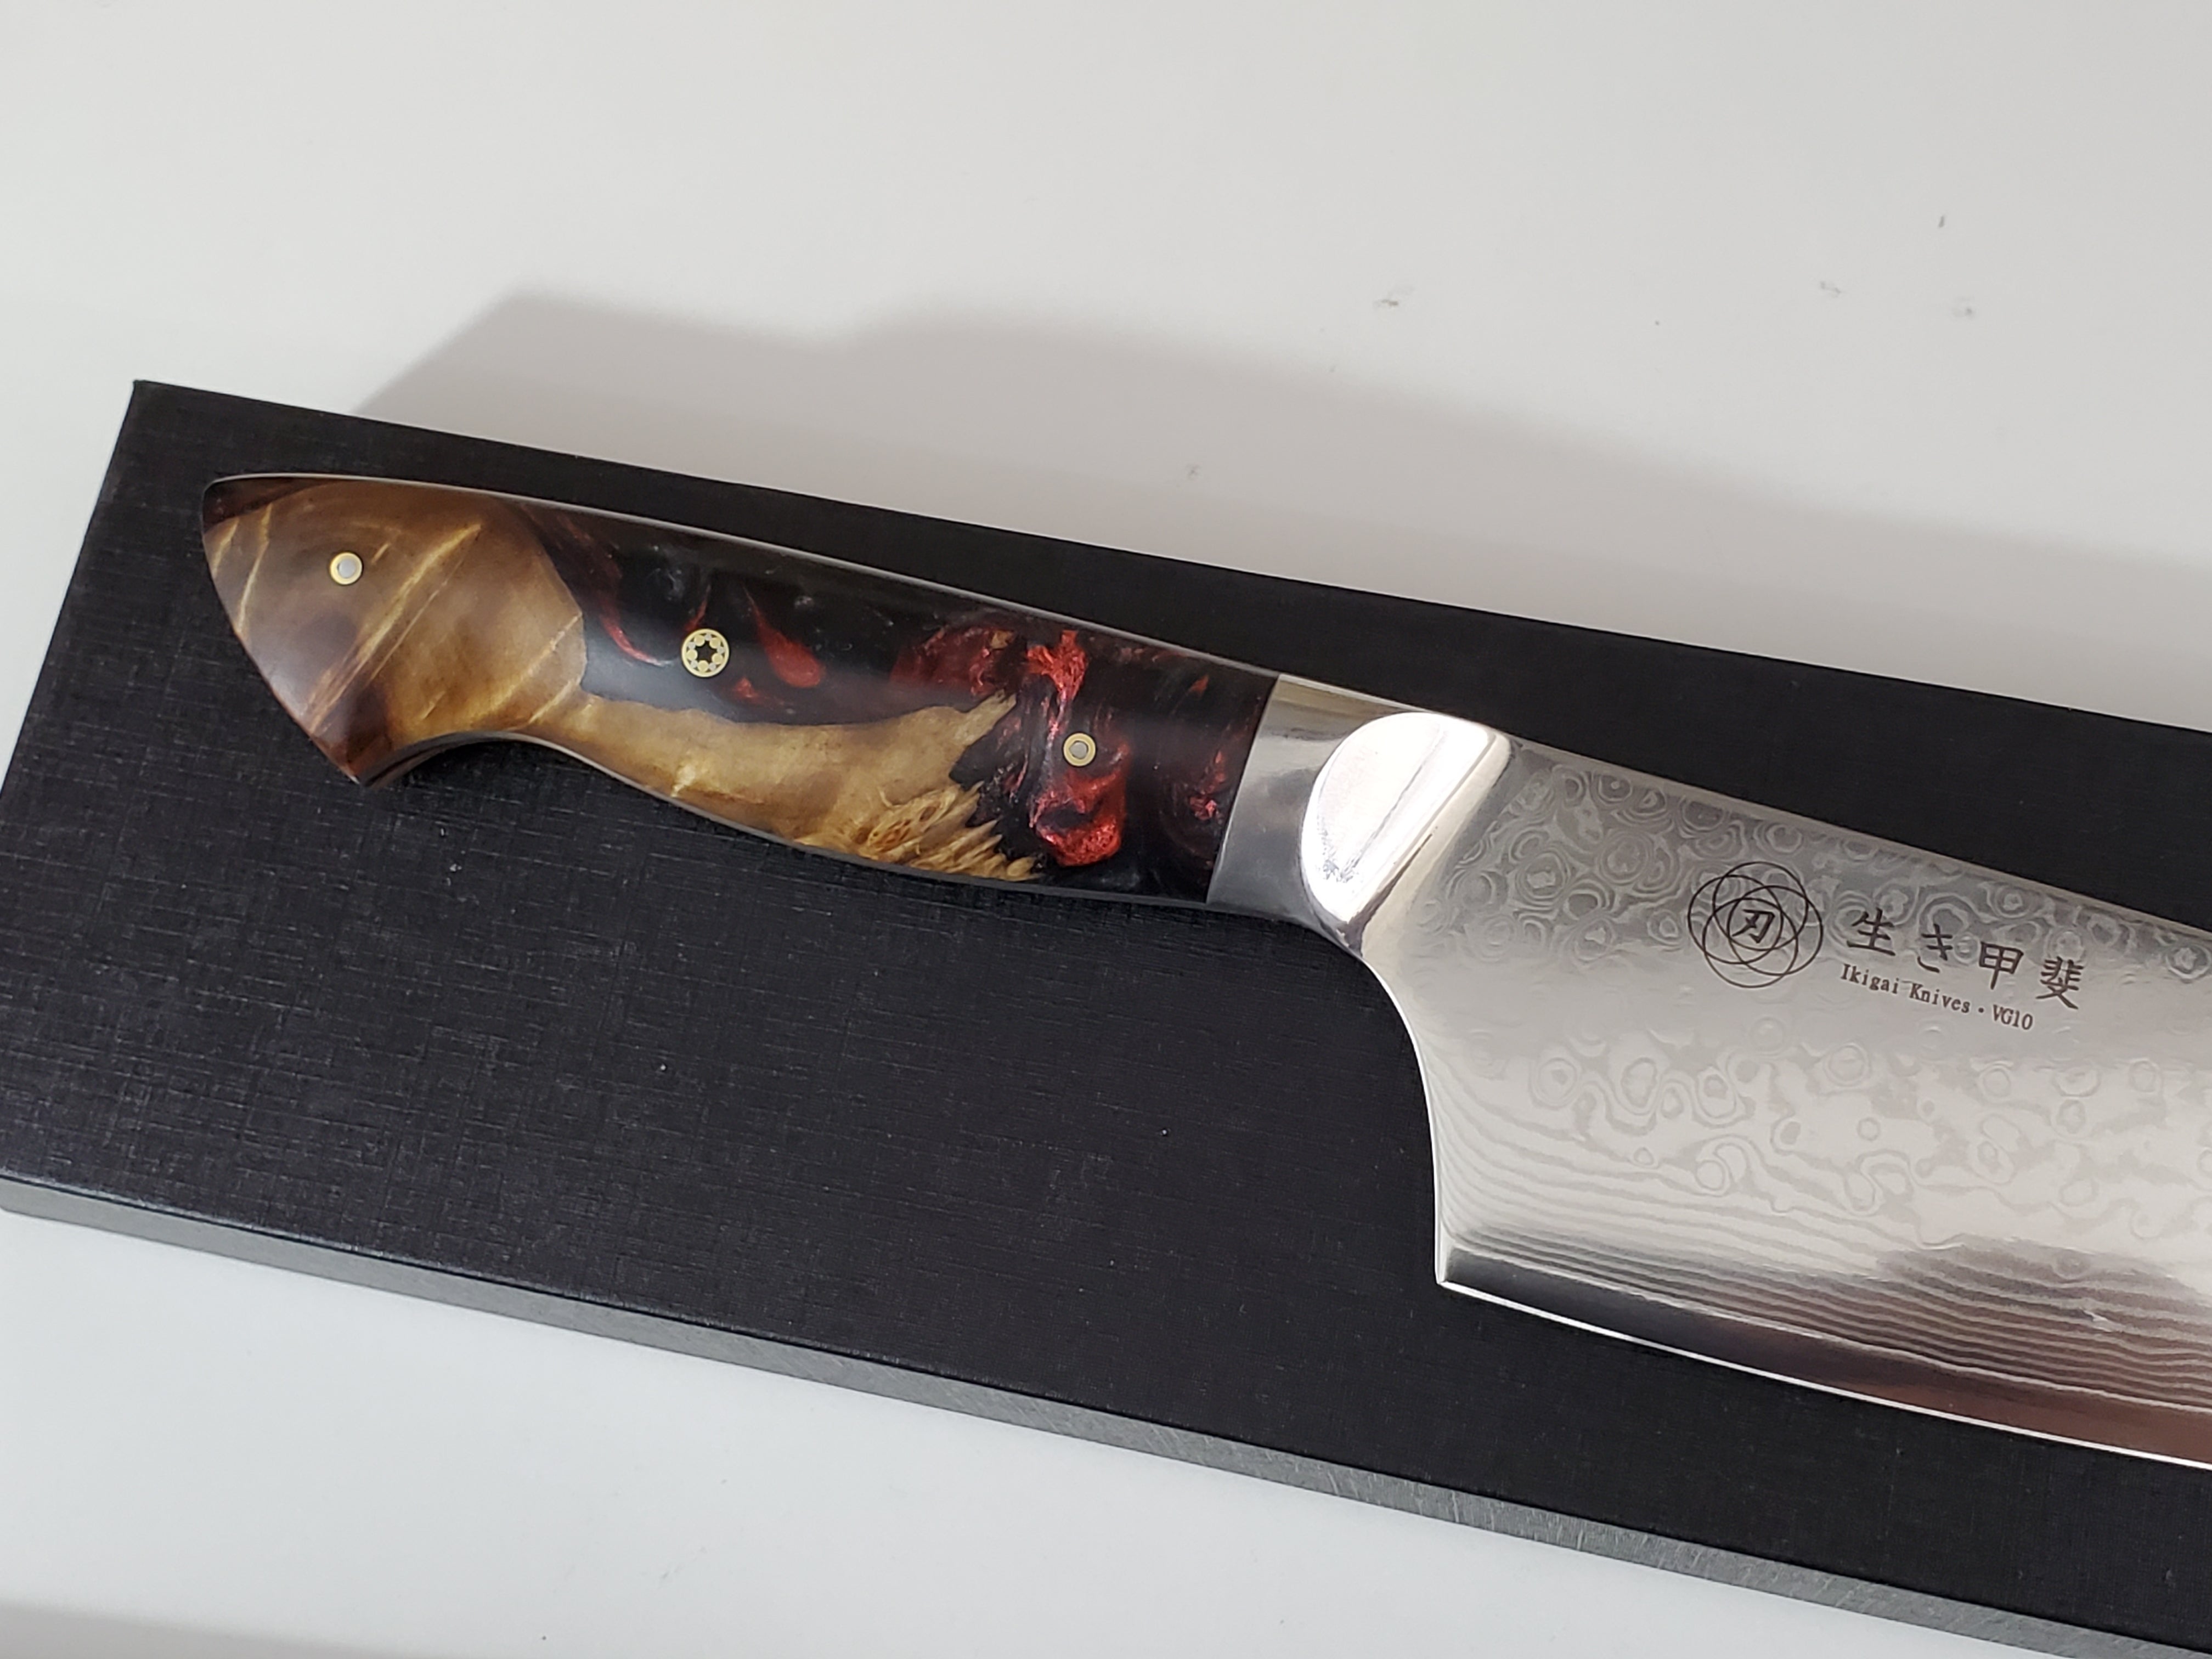 Ikigai Chef Knife Set - Professional Japanese Knives with Damascus Pattern